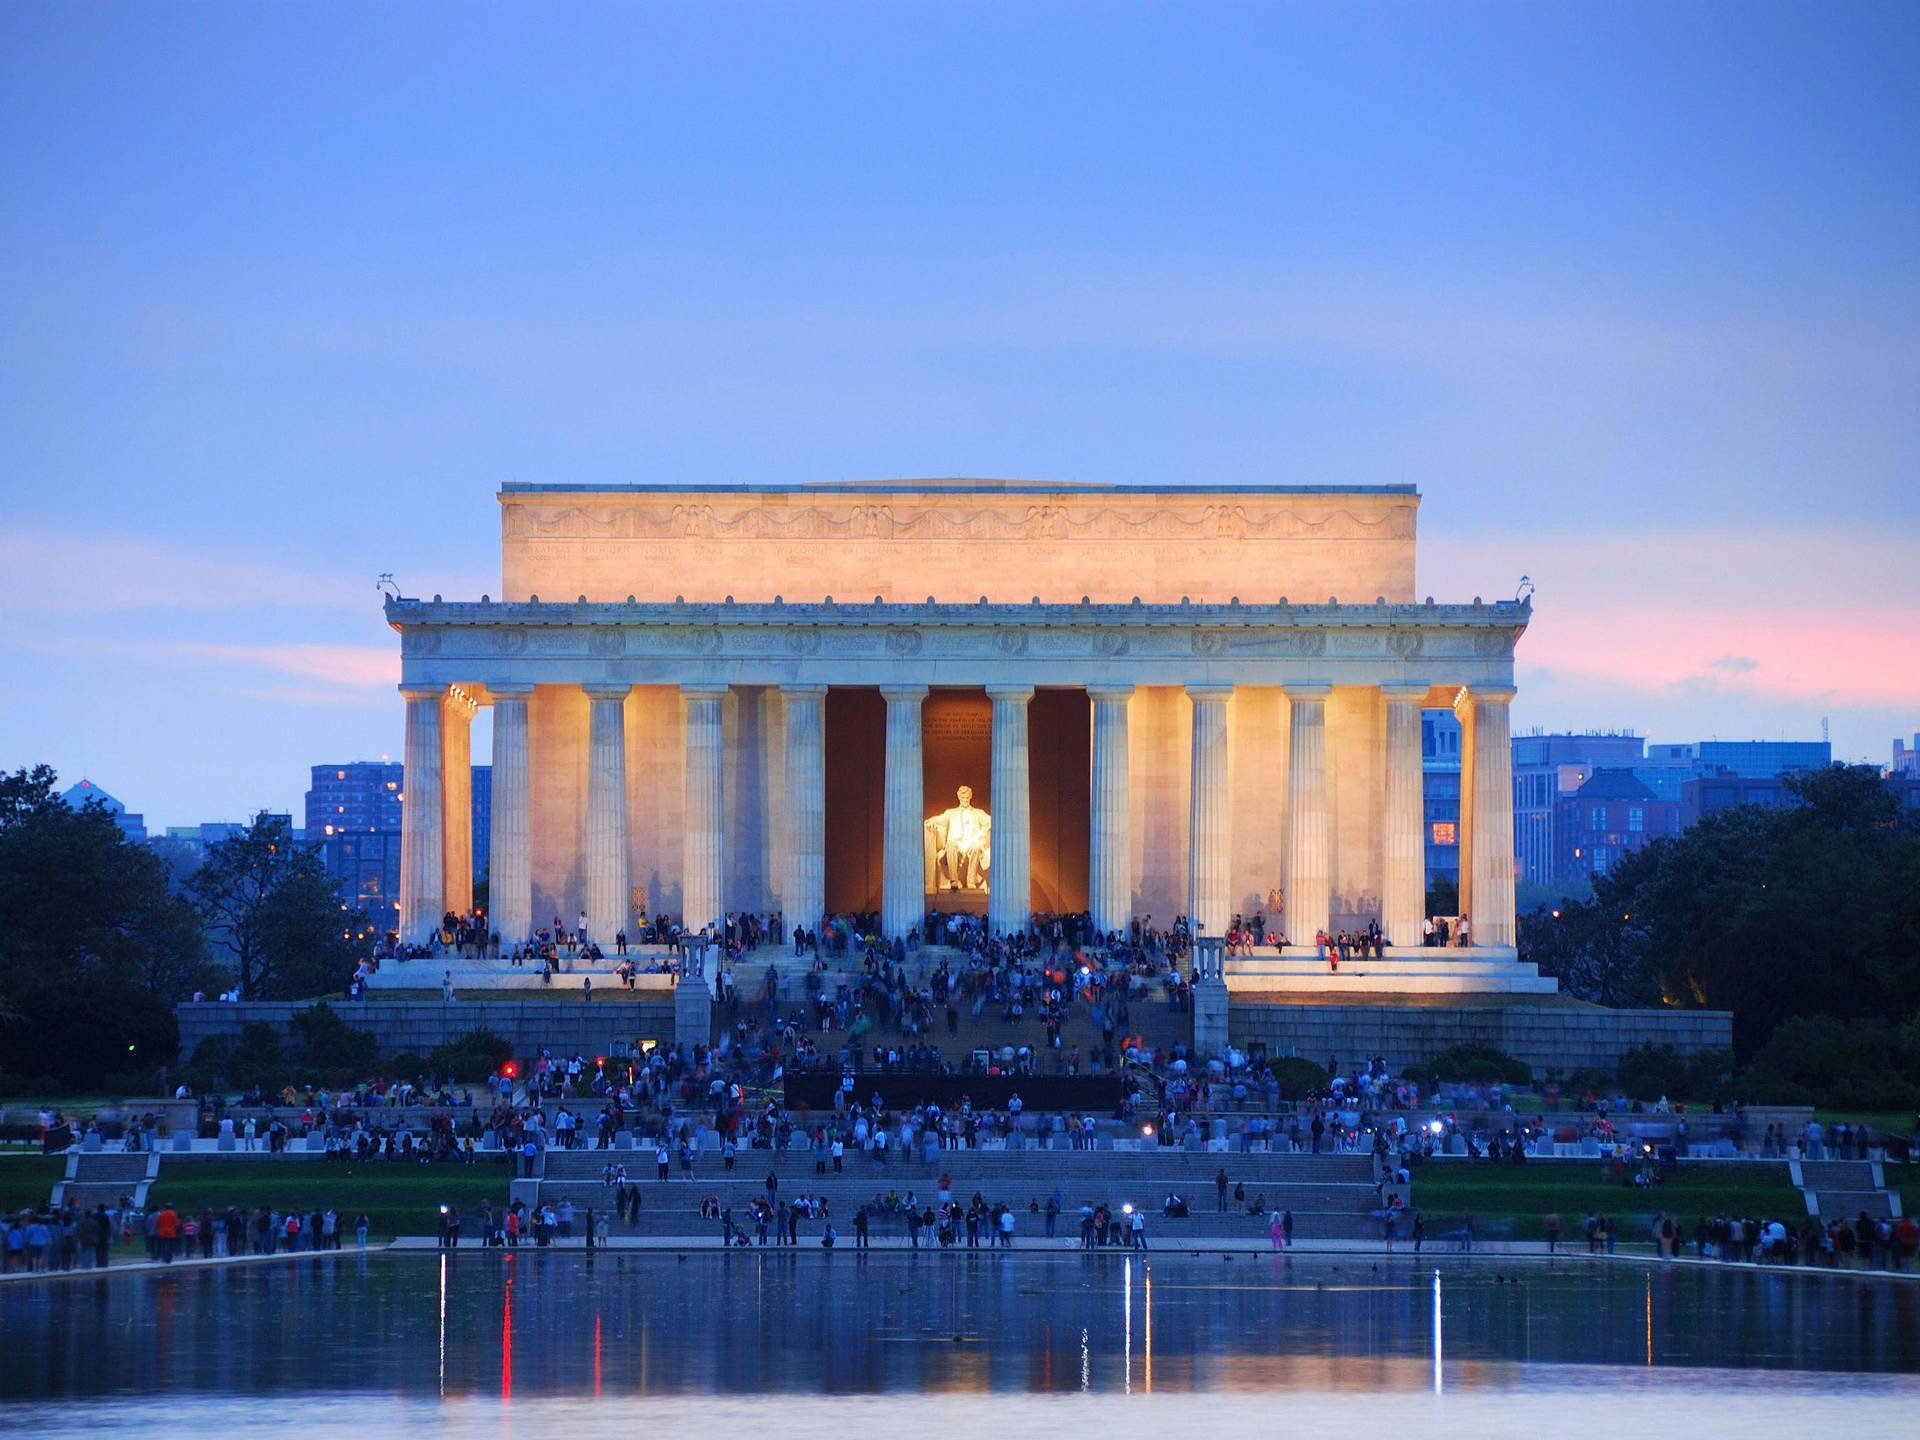 Imágenes Del Monumento A Lincoln